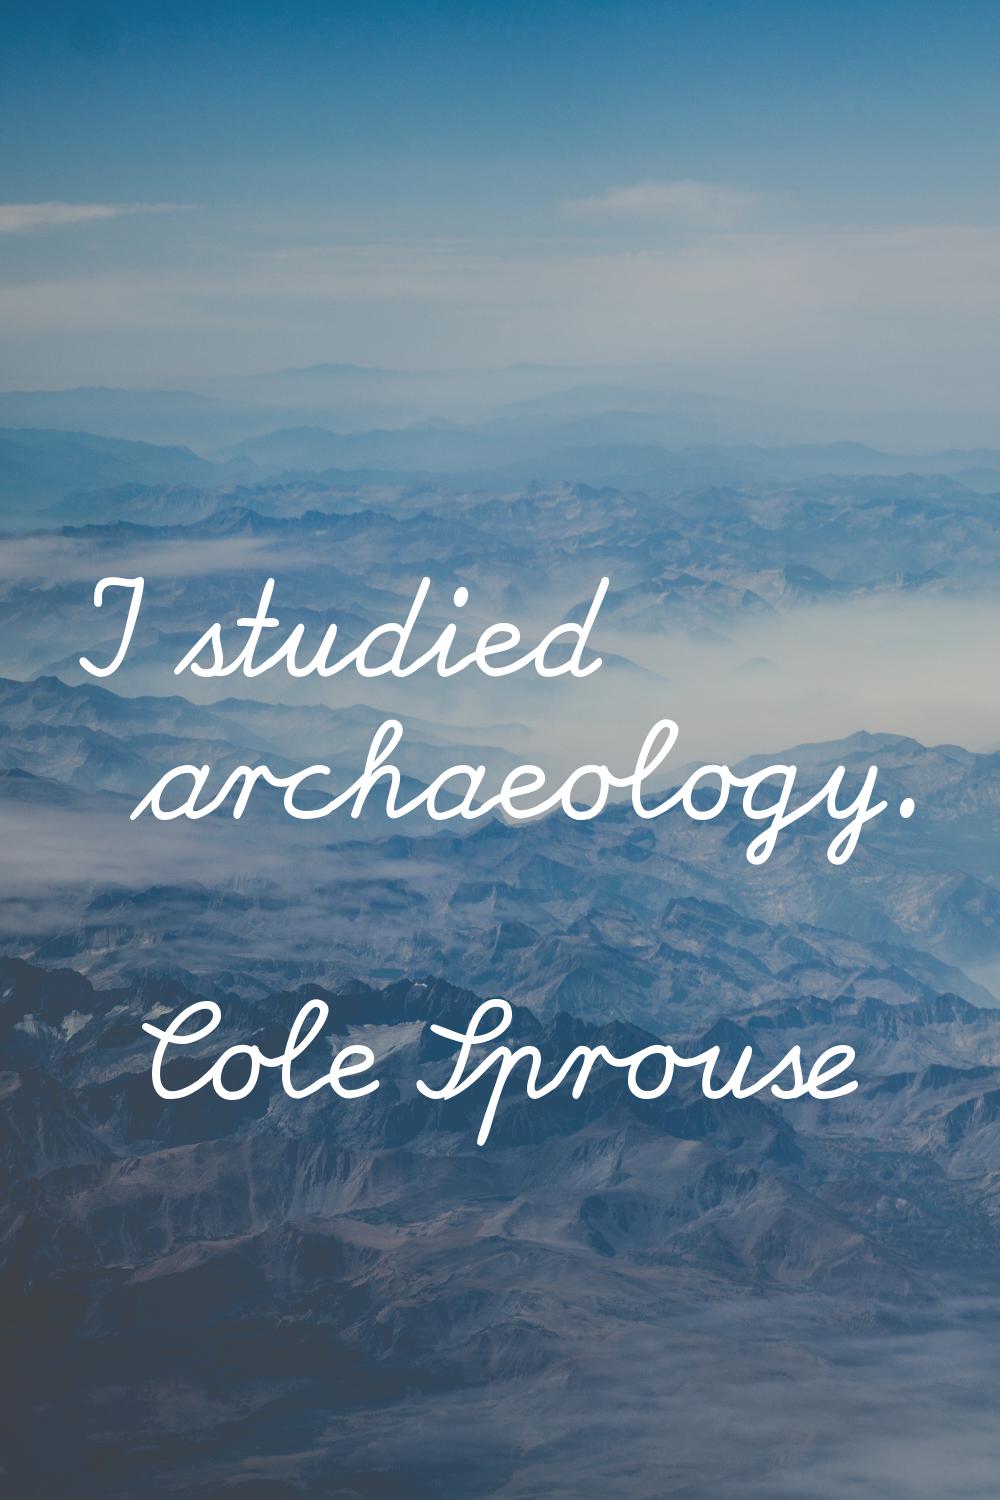 I studied archaeology.